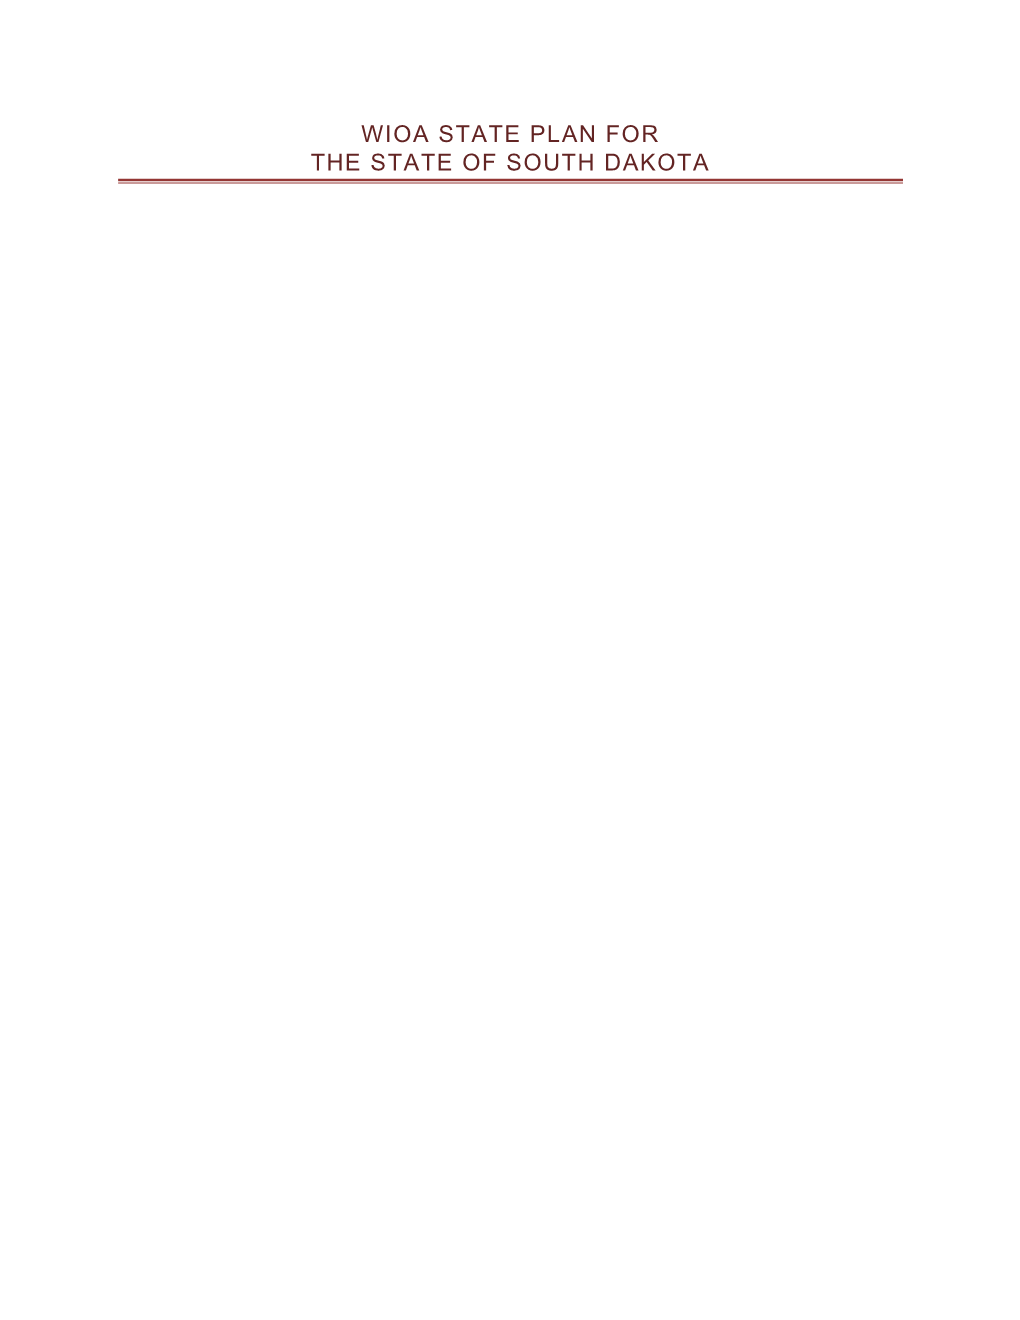 South Dakota WIOA Unified State Plan (Four-Year)